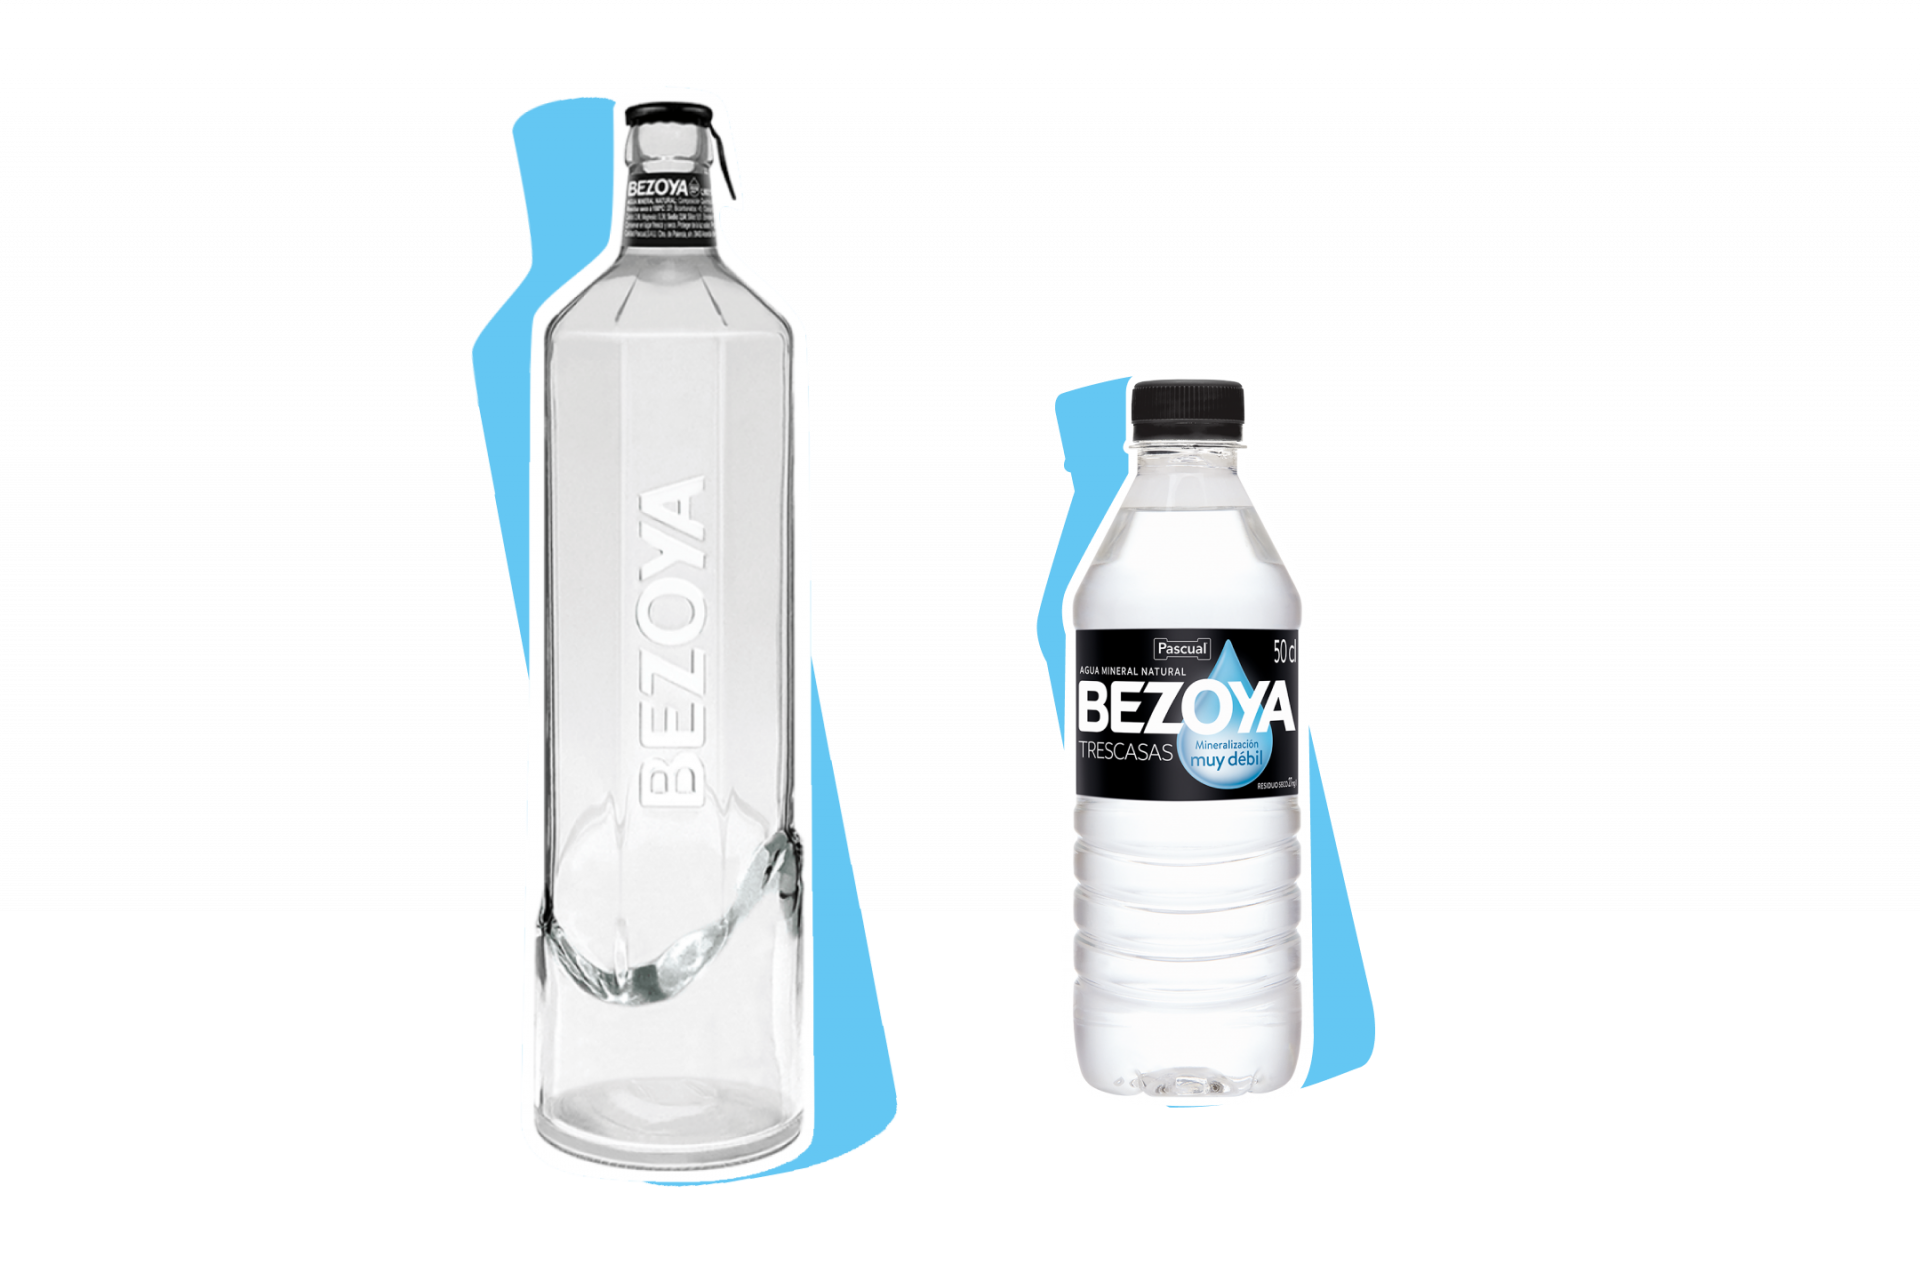 Agua mineral Bezoya Bag in box 8 litros palet 80 ud